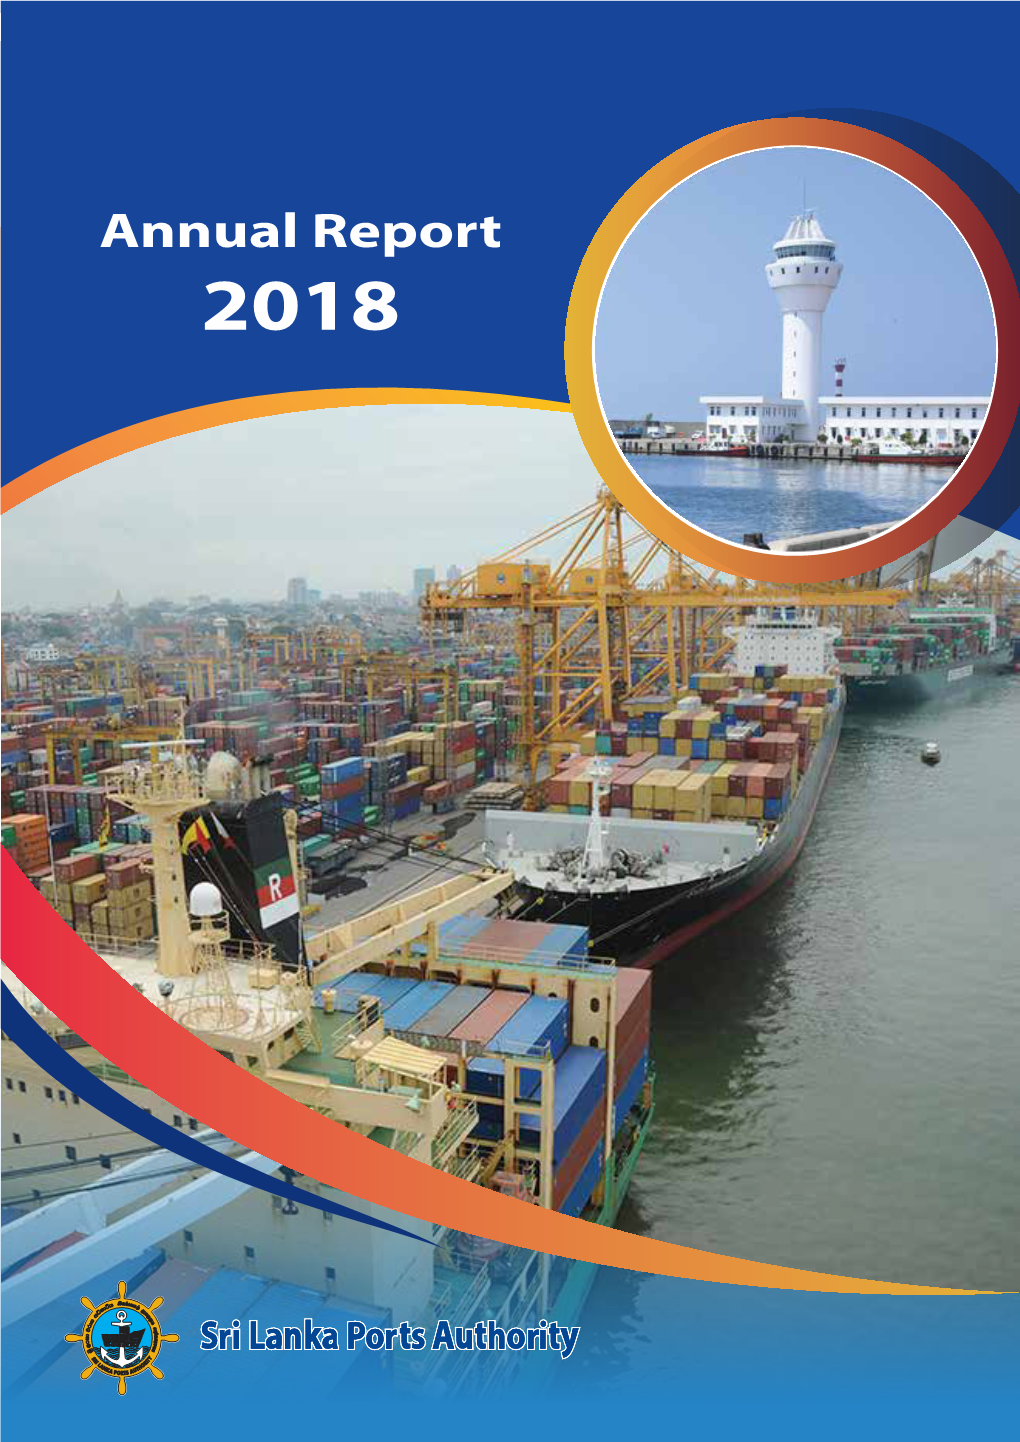 Annual Report of the Sri Lanka Ports